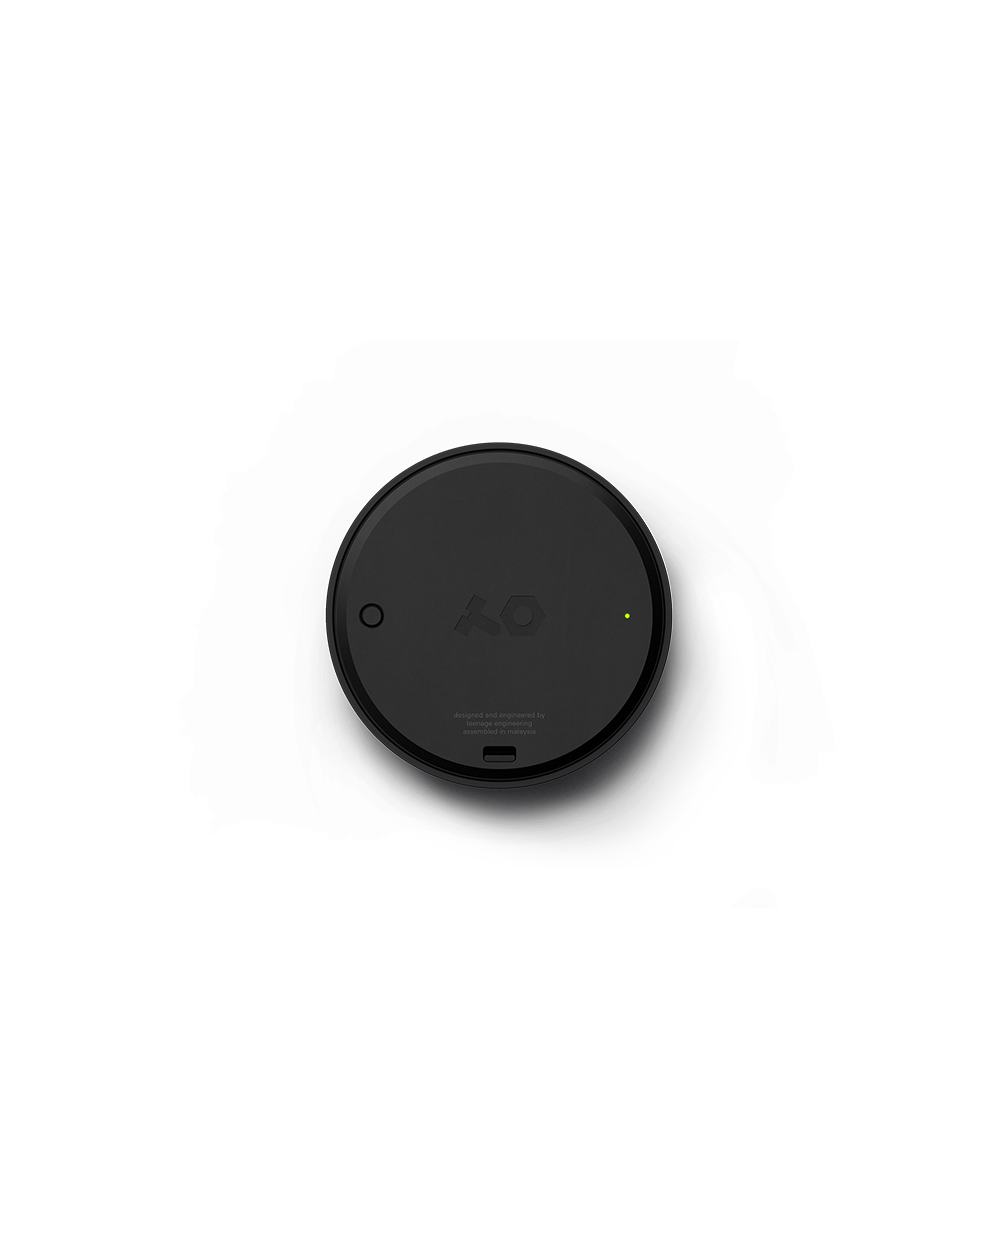 Ortho Bluetooth Remote - Black